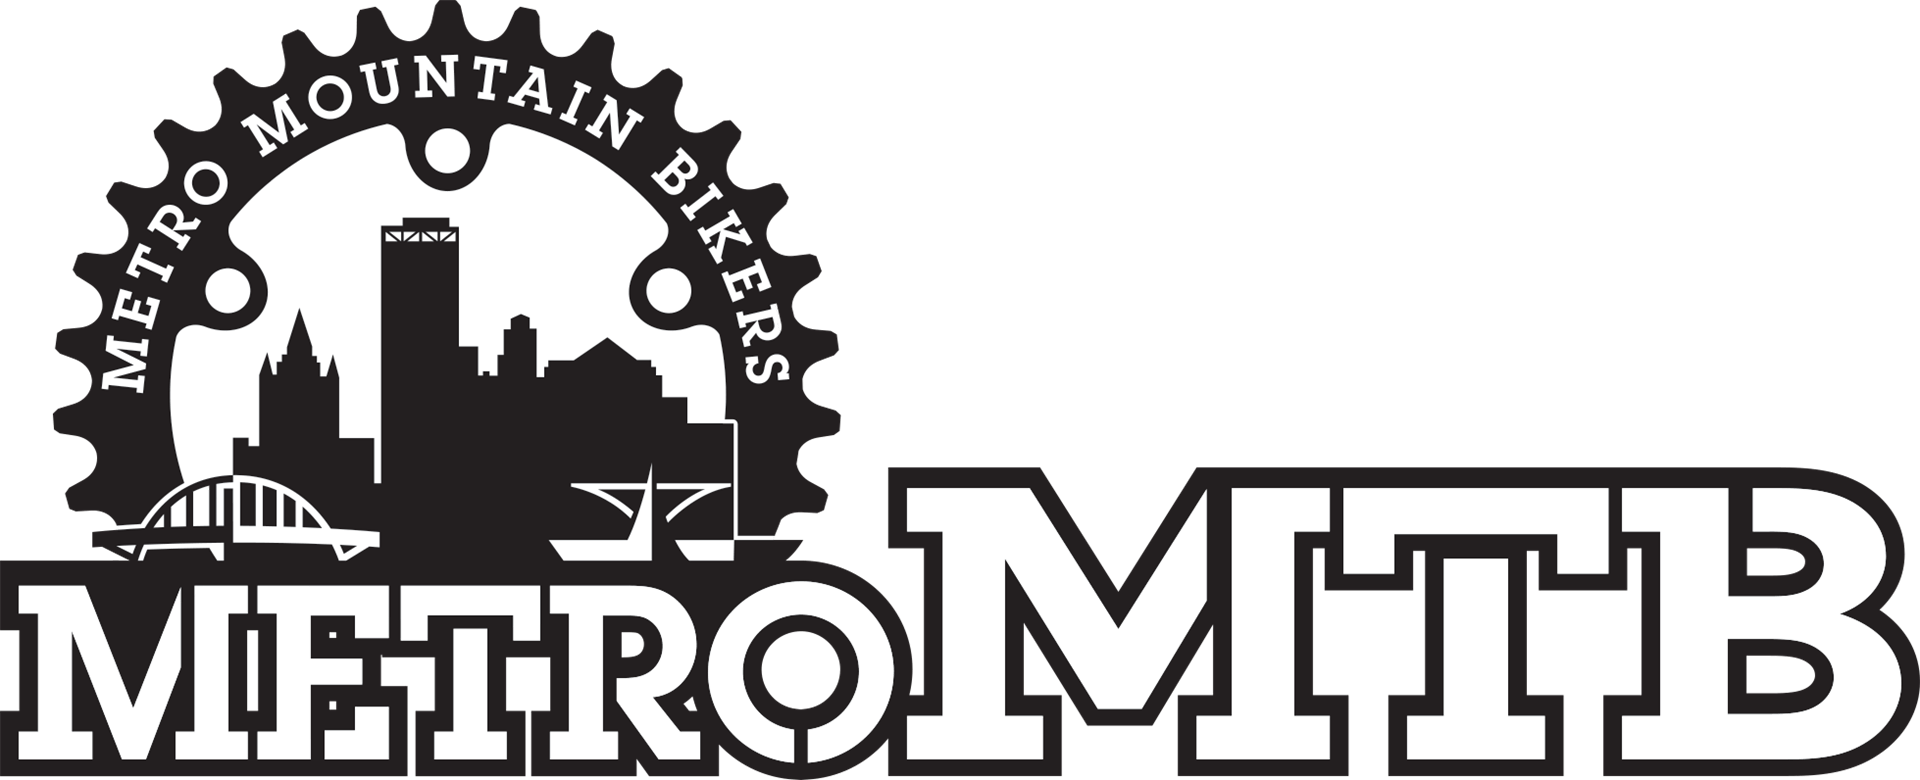 MTB Mountain Logo - Metro Mountain Bikers - Home